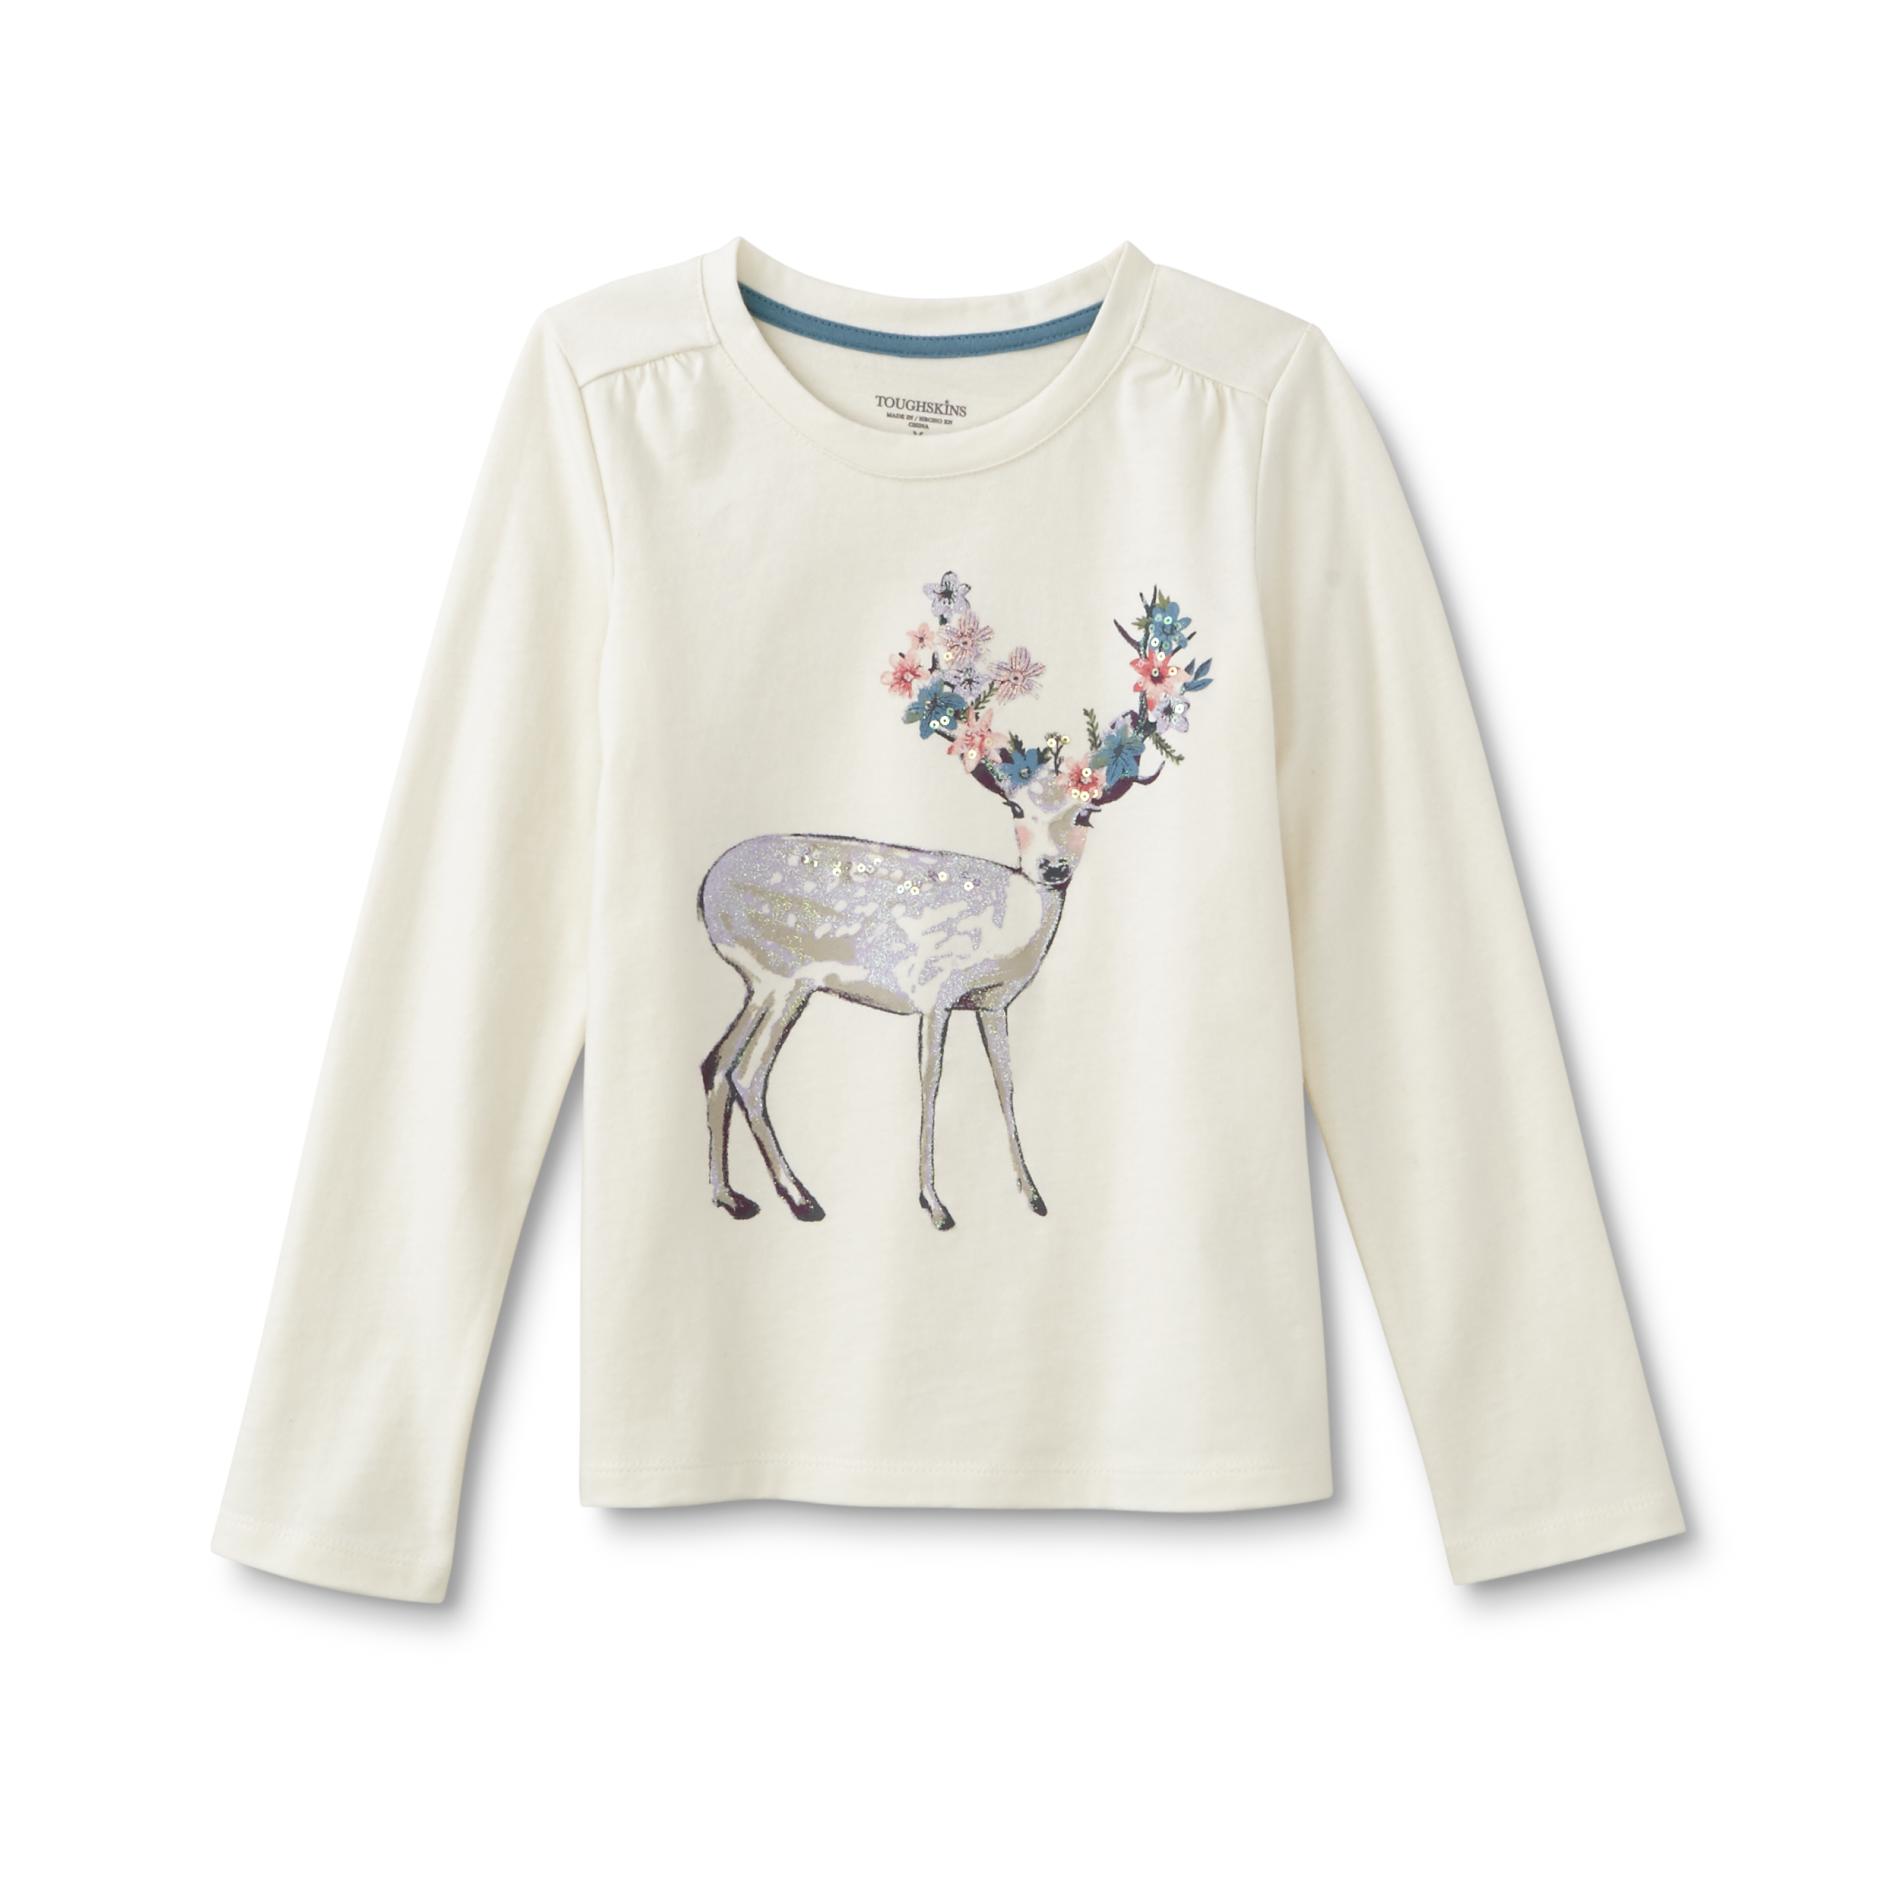 Toughskins Infant & Toddler Girl's Long-Sleeve Graphic T-Shirt - Deer